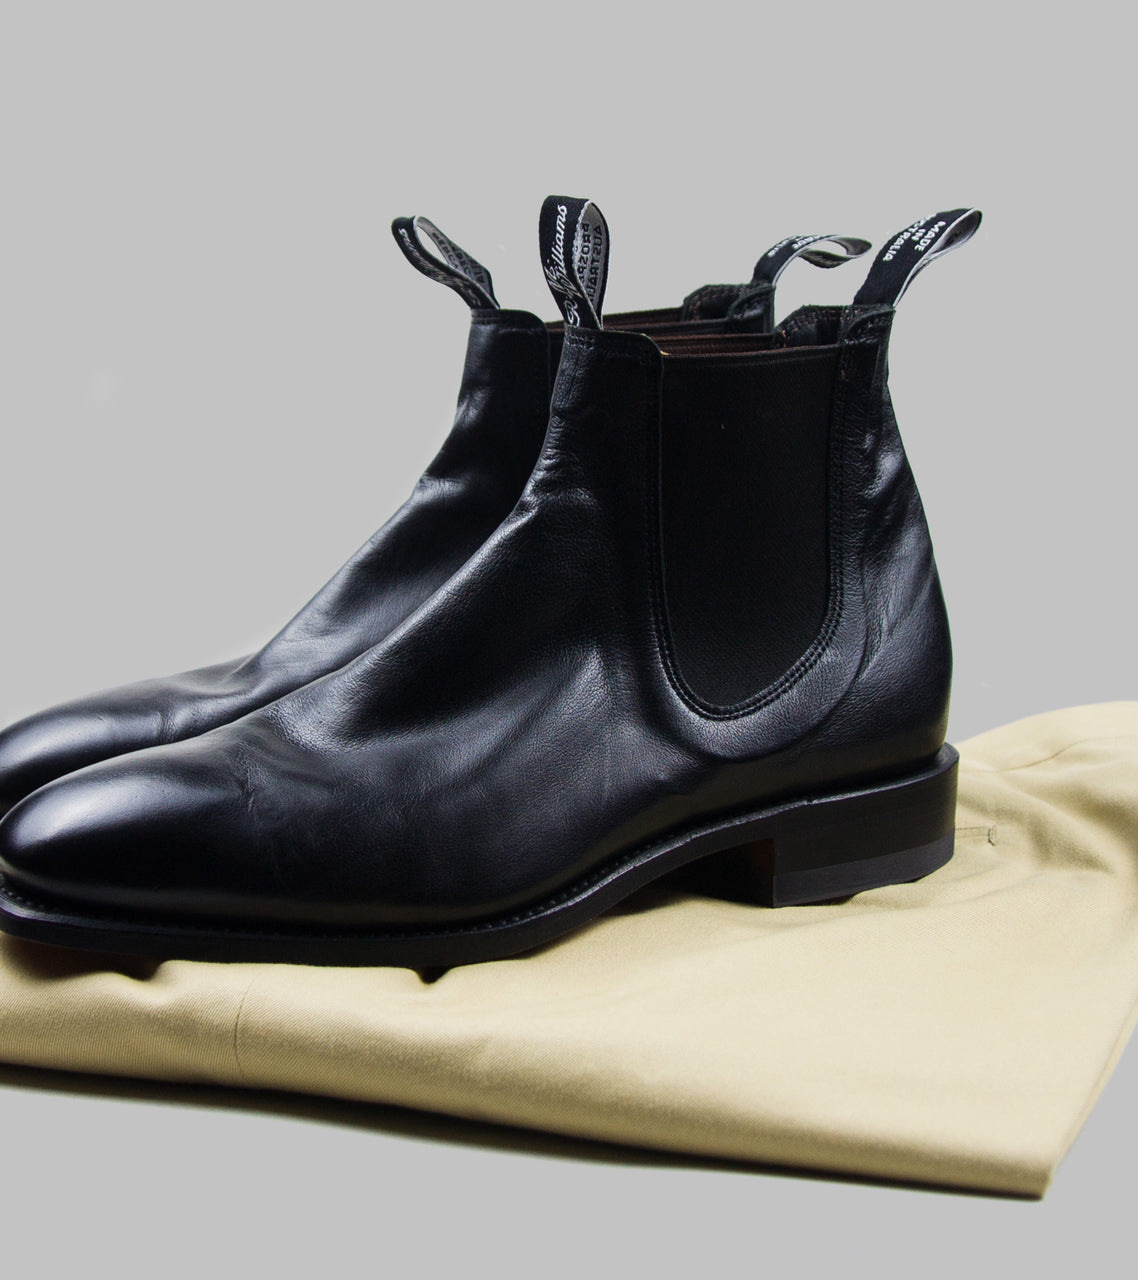 rm williams black boots